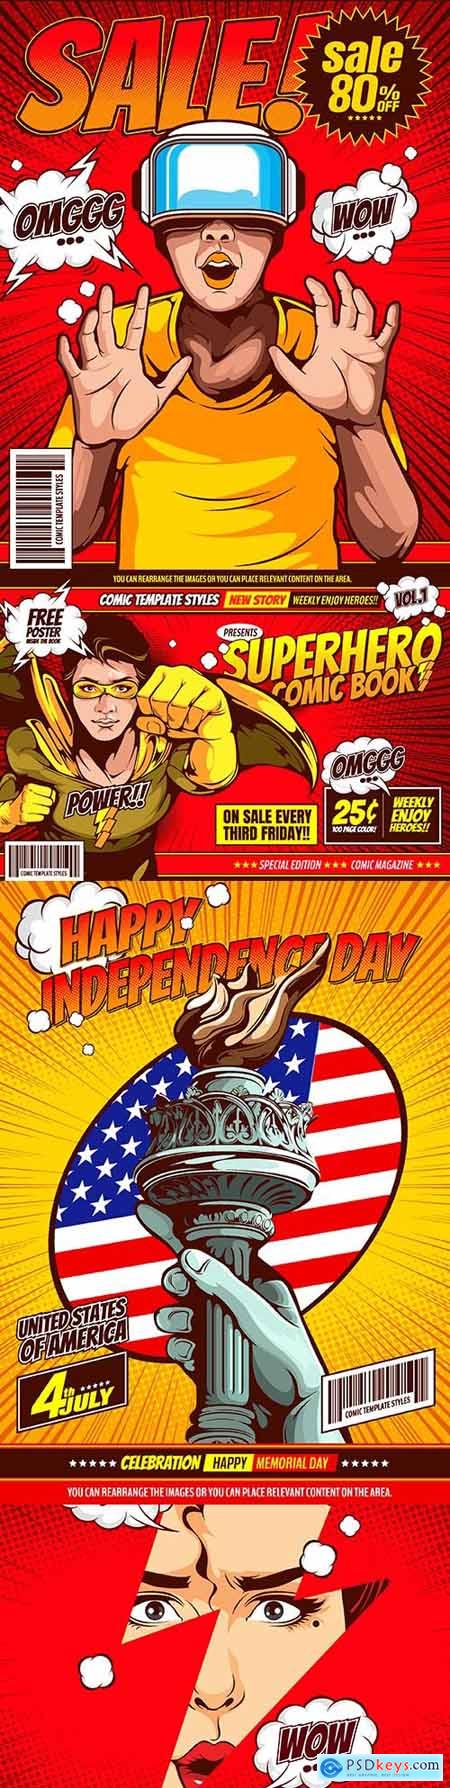 Superhero comic book covers pop art design